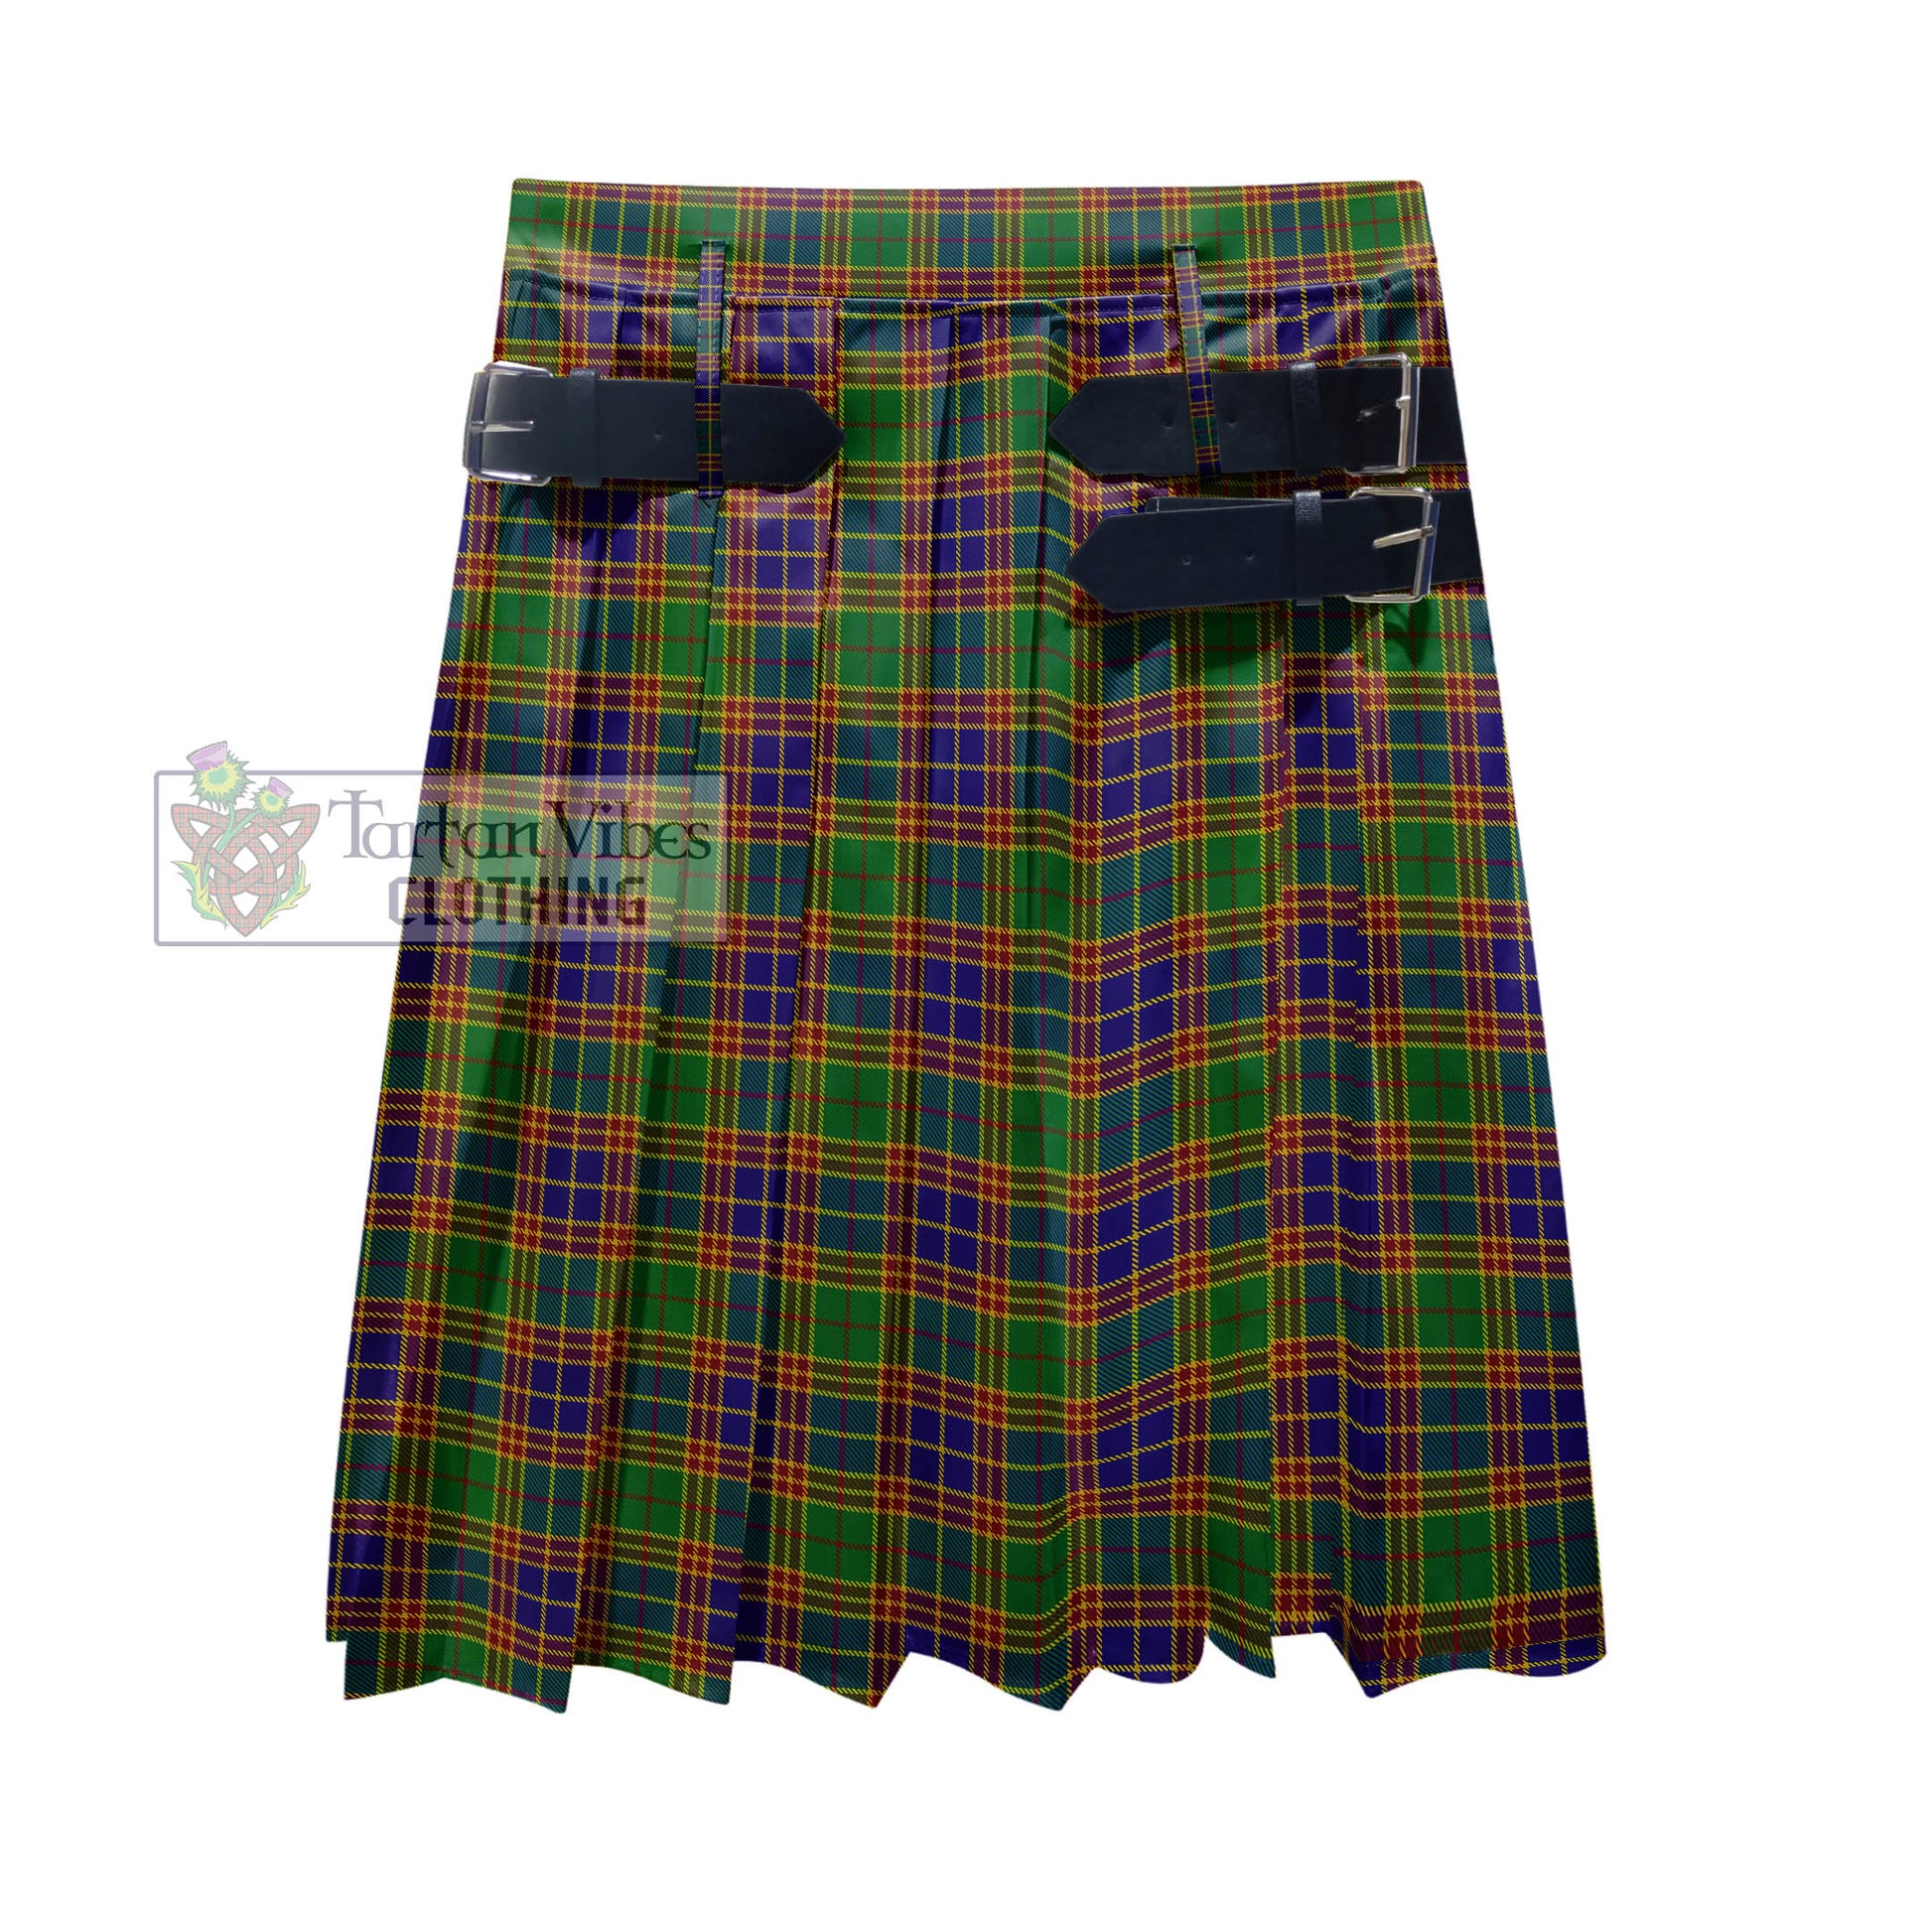 Tartan Vibes Clothing Stephenson Old Tartan Men's Pleated Skirt - Fashion Casual Retro Scottish Style